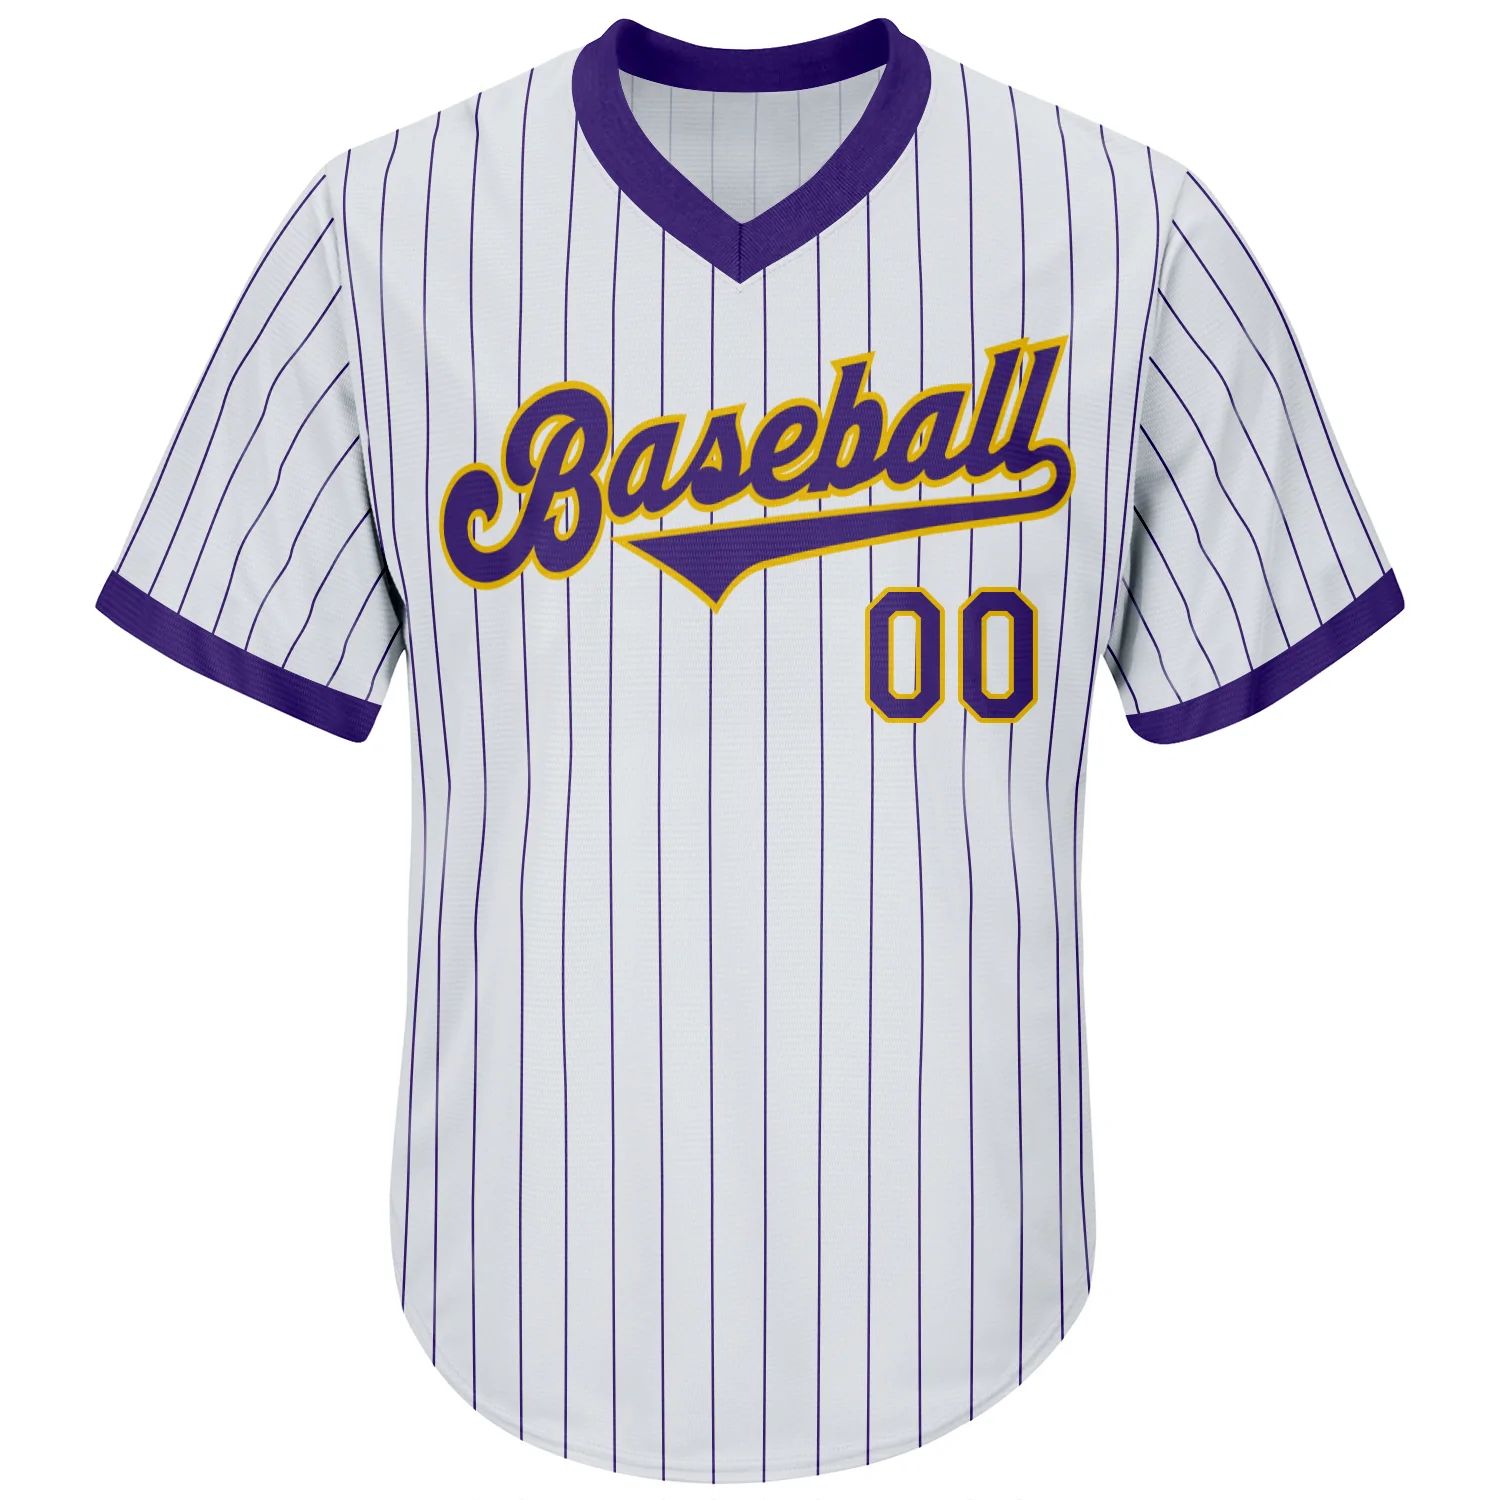 build-gold-white-purple-strip-baseball-purple-jersey-authentic-throwback-ewhite02586-online-2.jpg